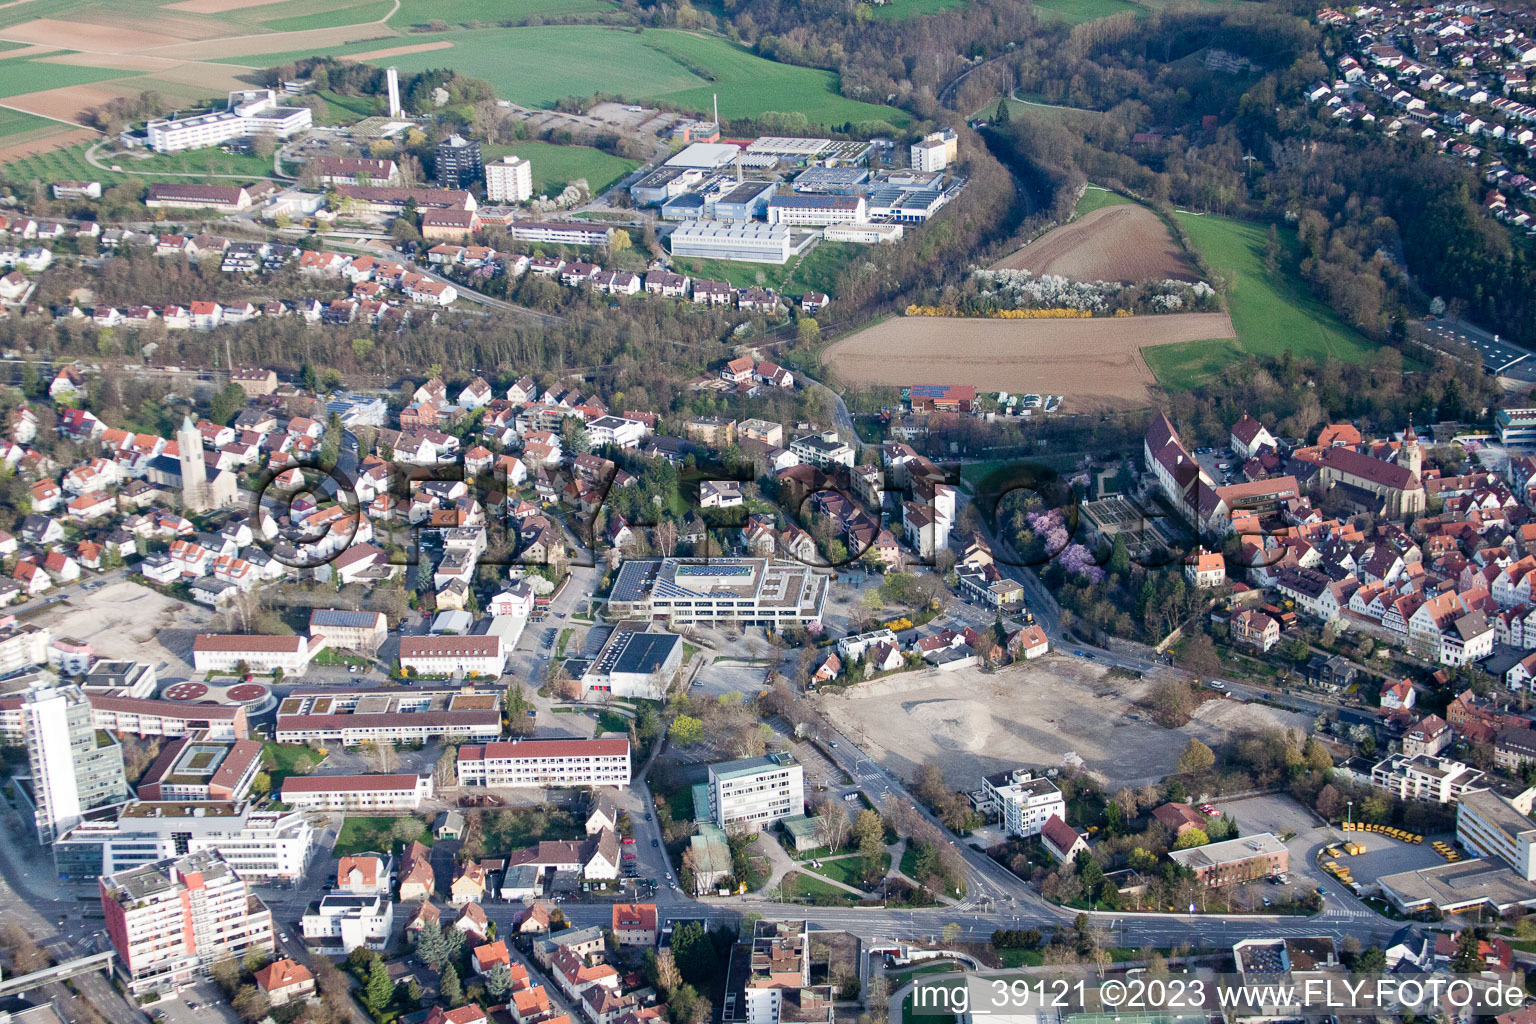 Drone image of Johannes Kepler High School, Lindenstr in Leonberg in the state Baden-Wuerttemberg, Germany